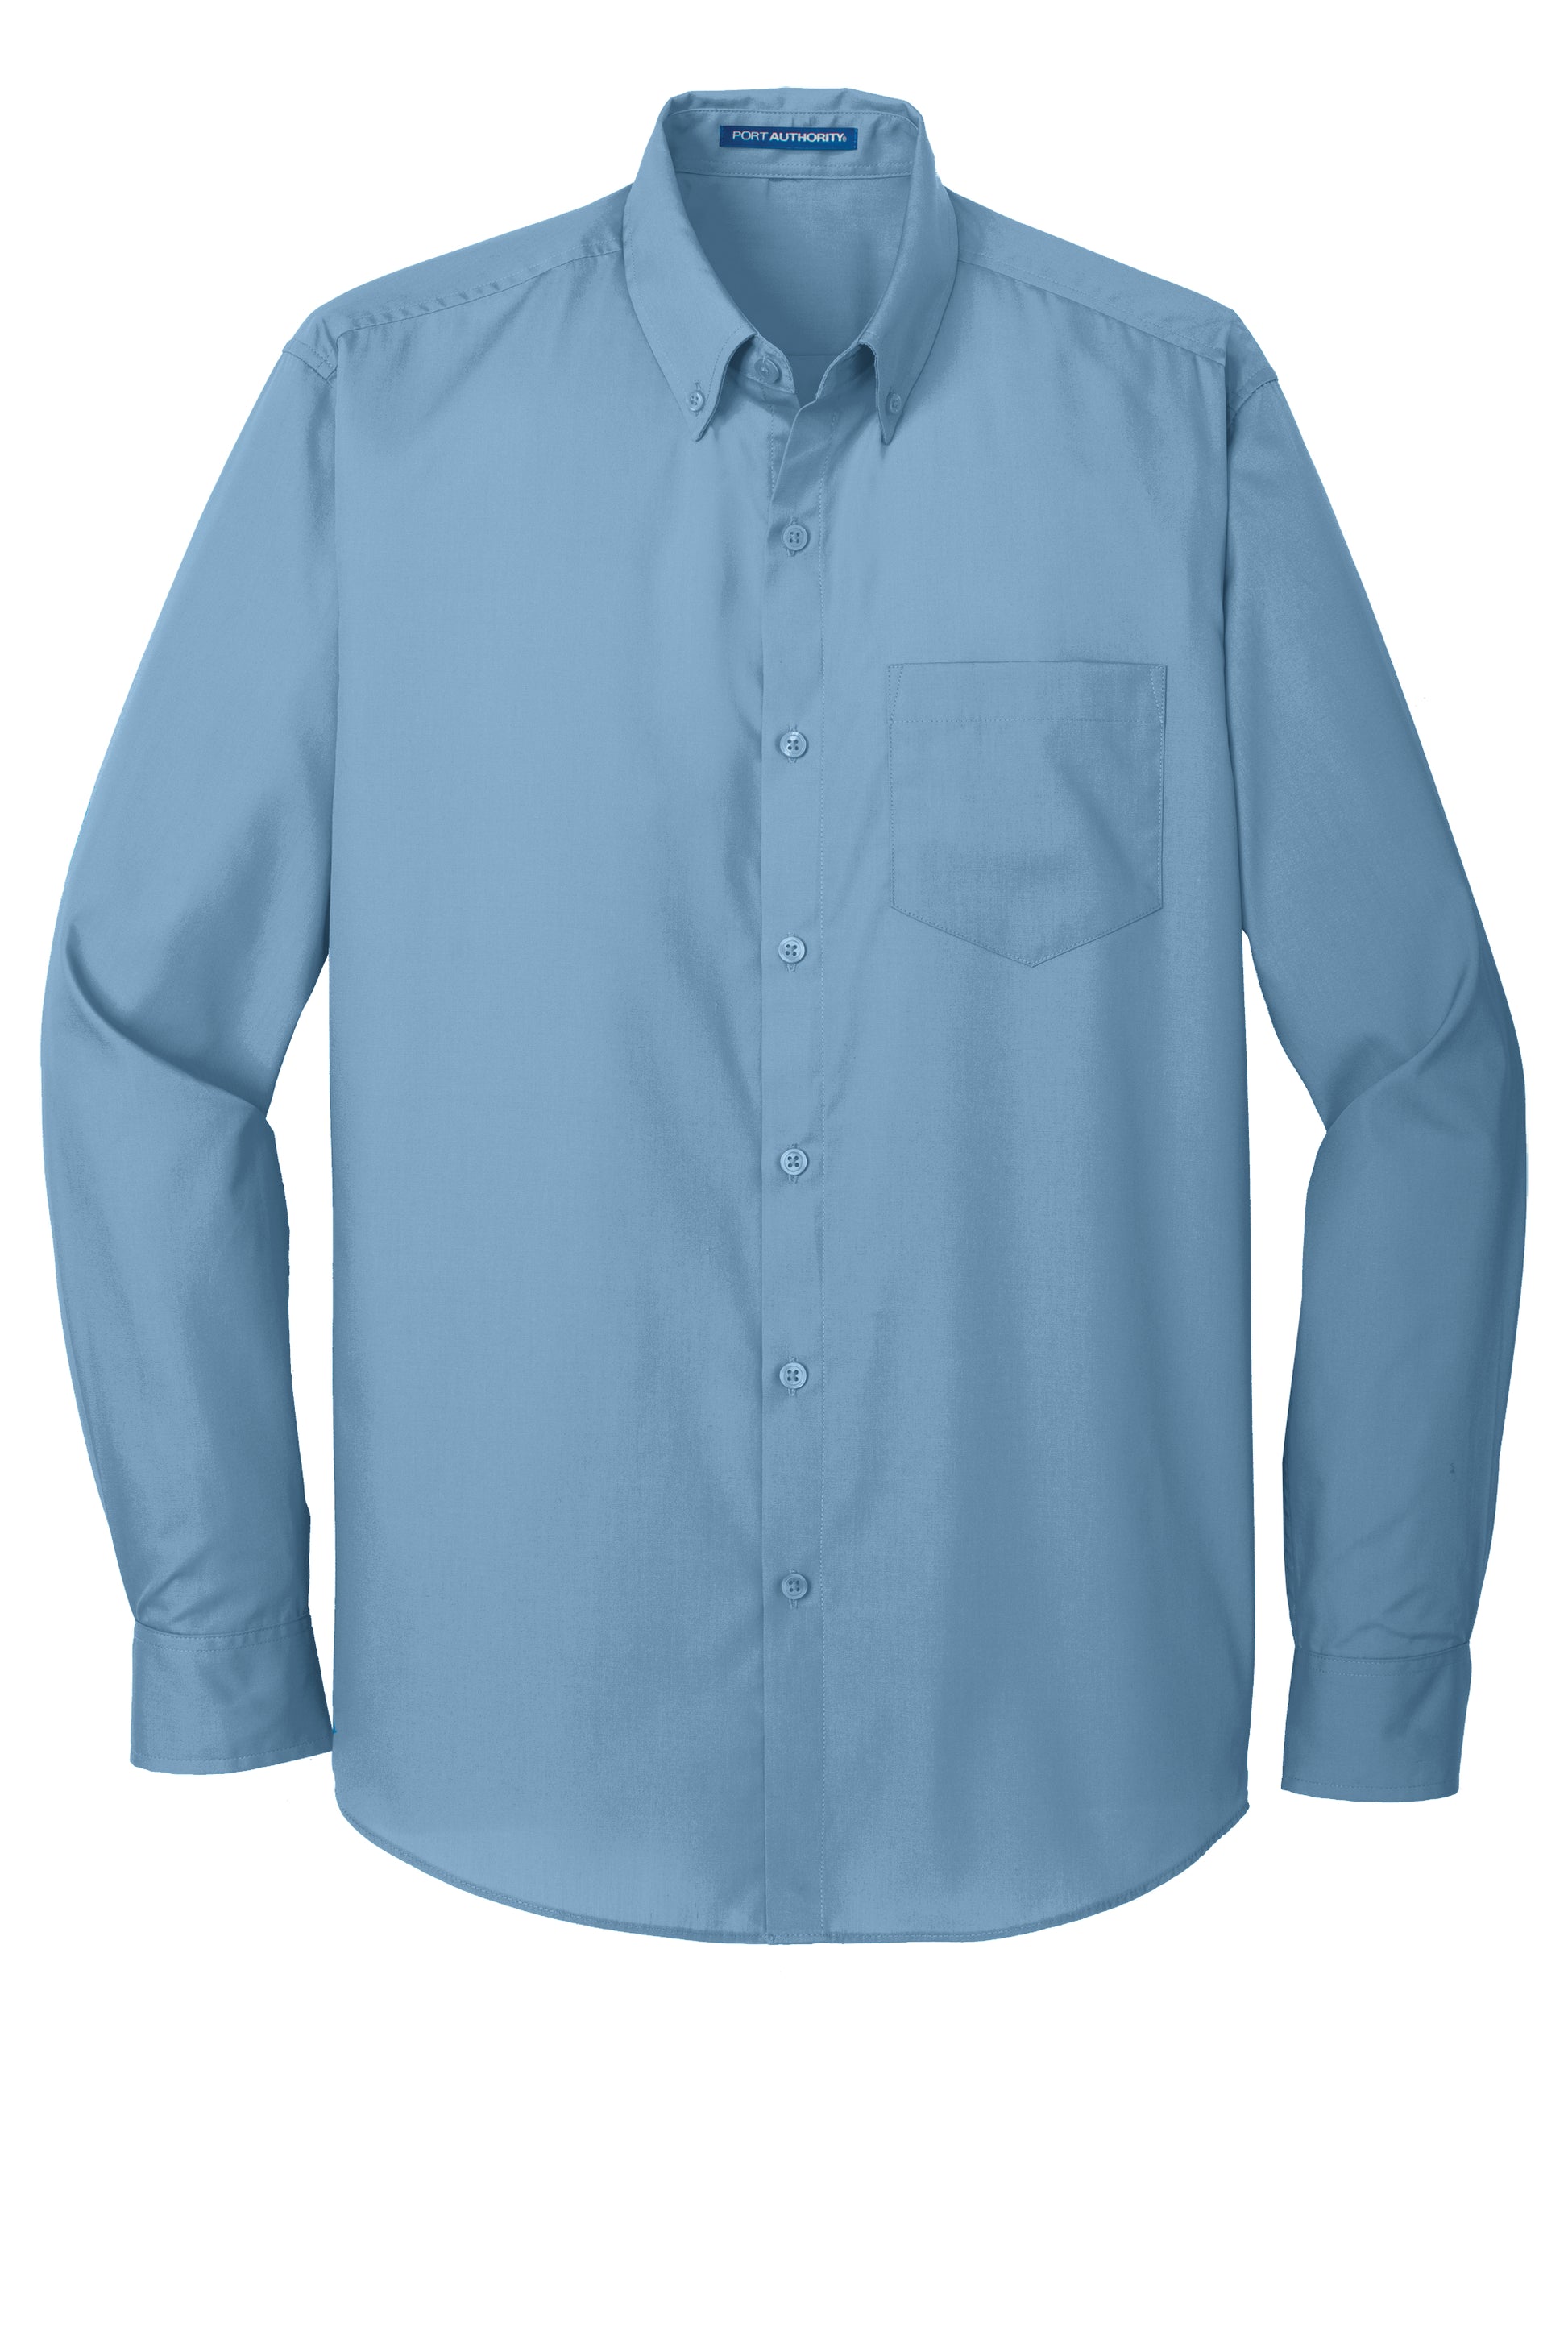 port authority long sleeve carefree poplin shirt carolina blue